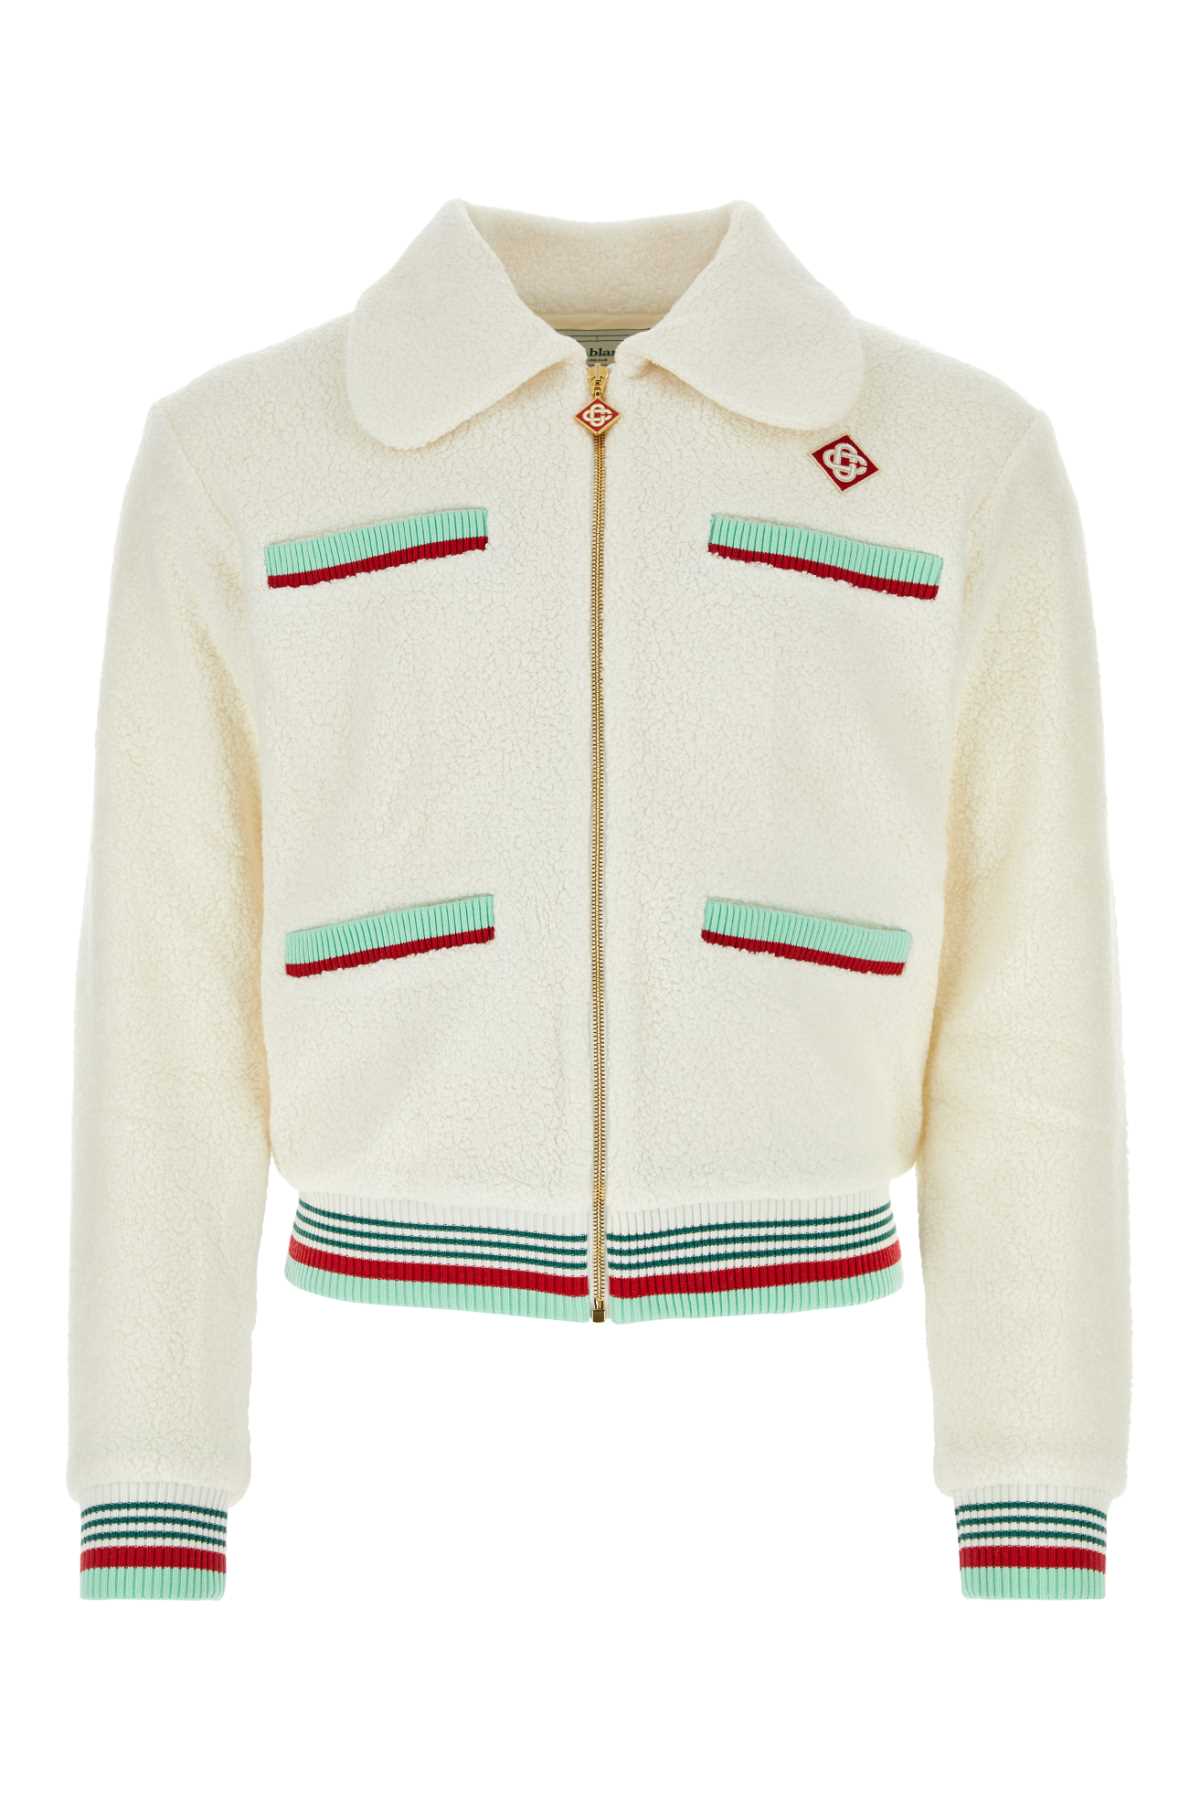 Casablanca White Teddy Jacket